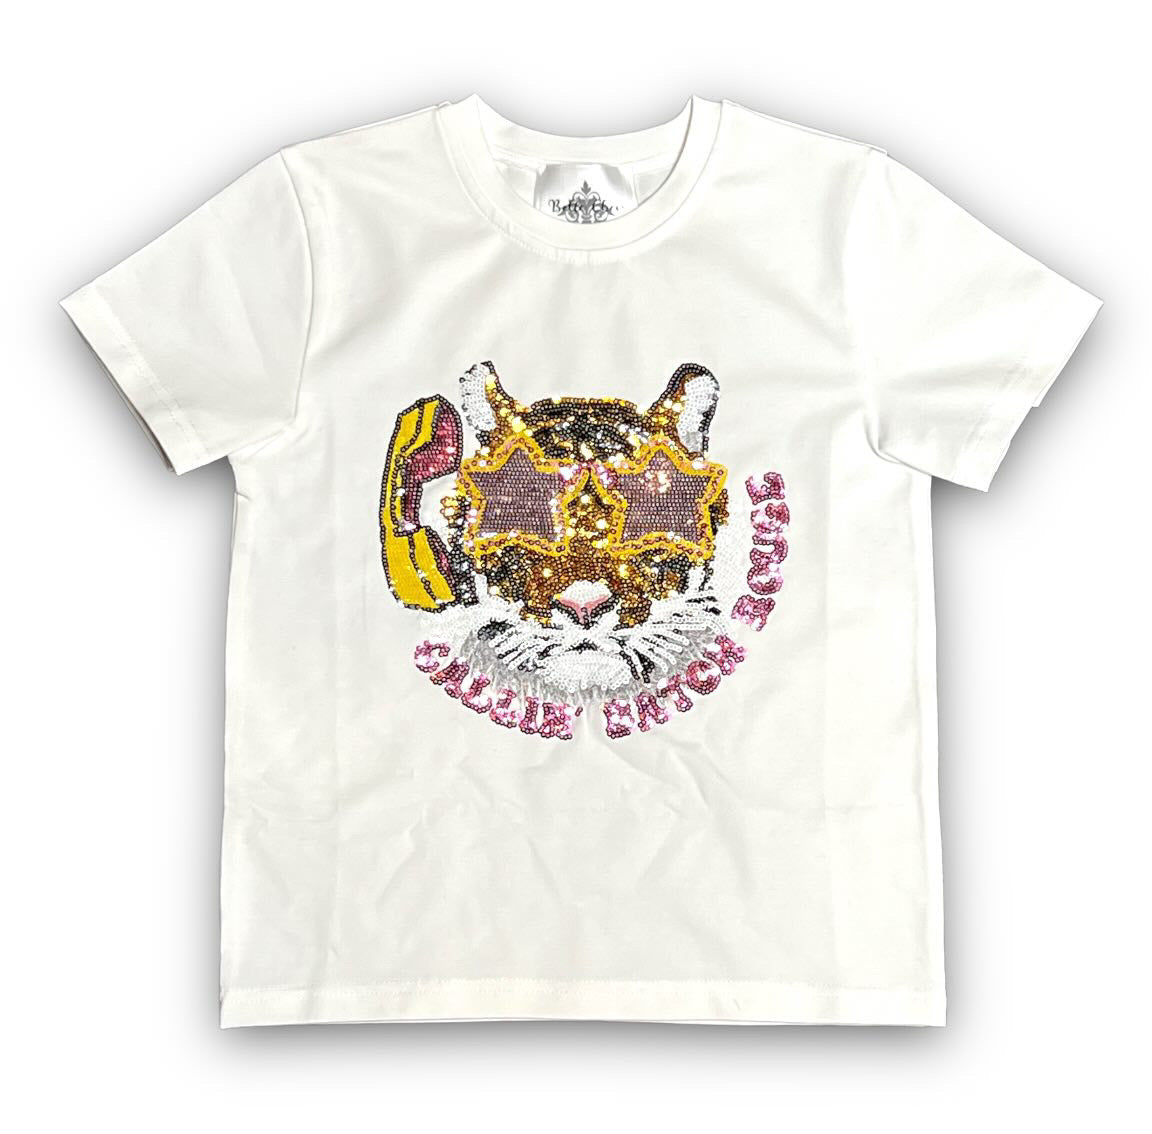 Callin’ Baton Rouge Sequin Shirt